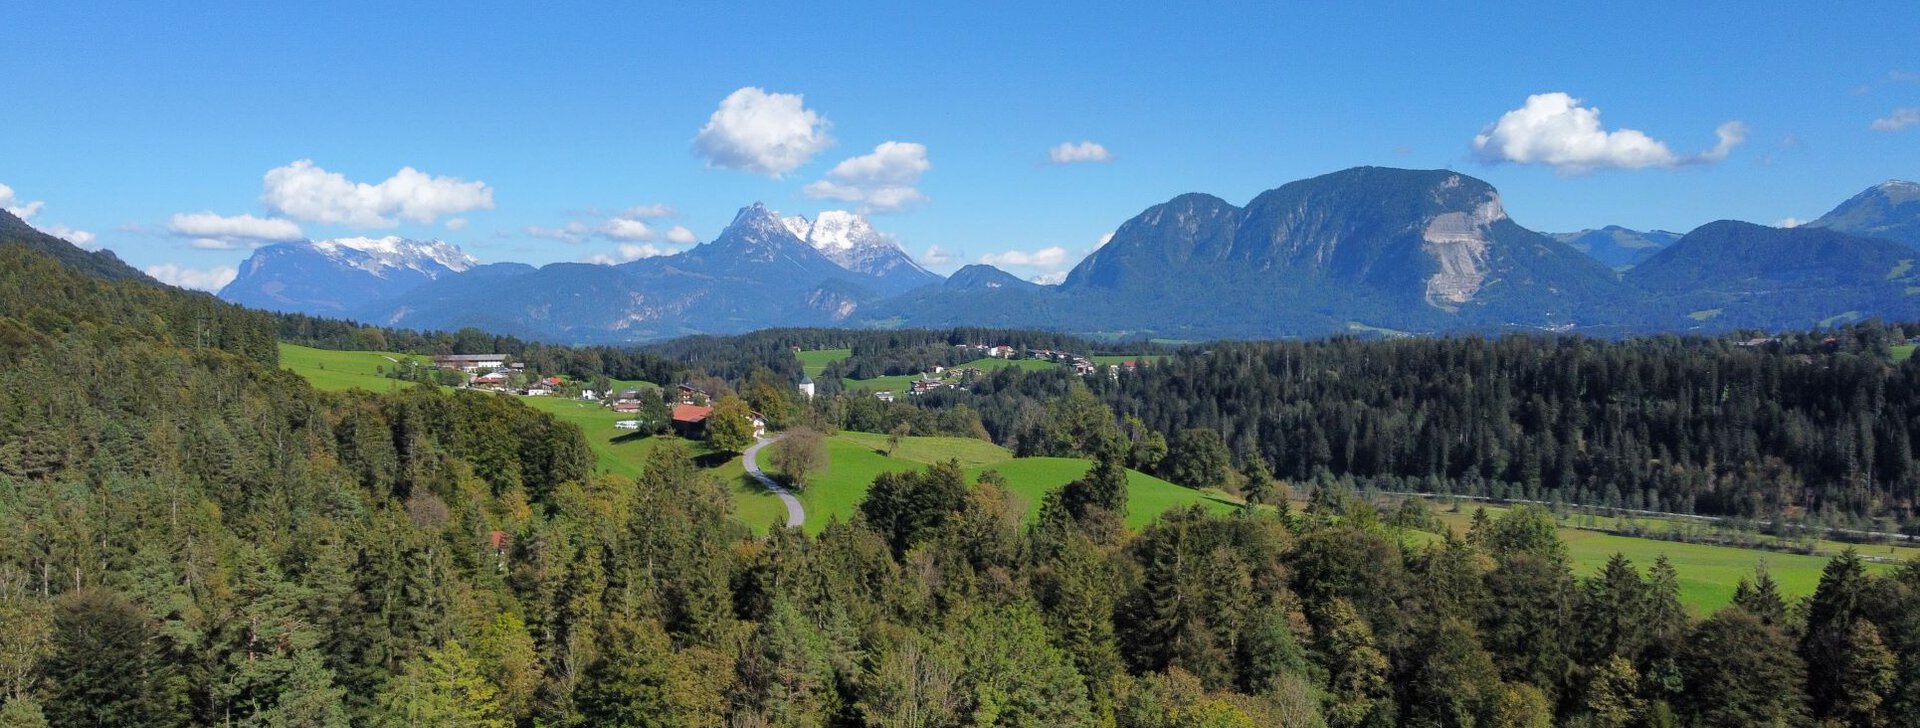 Umgebung, Landsitz in Tirol, Immobilie kaufen, Angerberg | © HausBauHaus GmbH